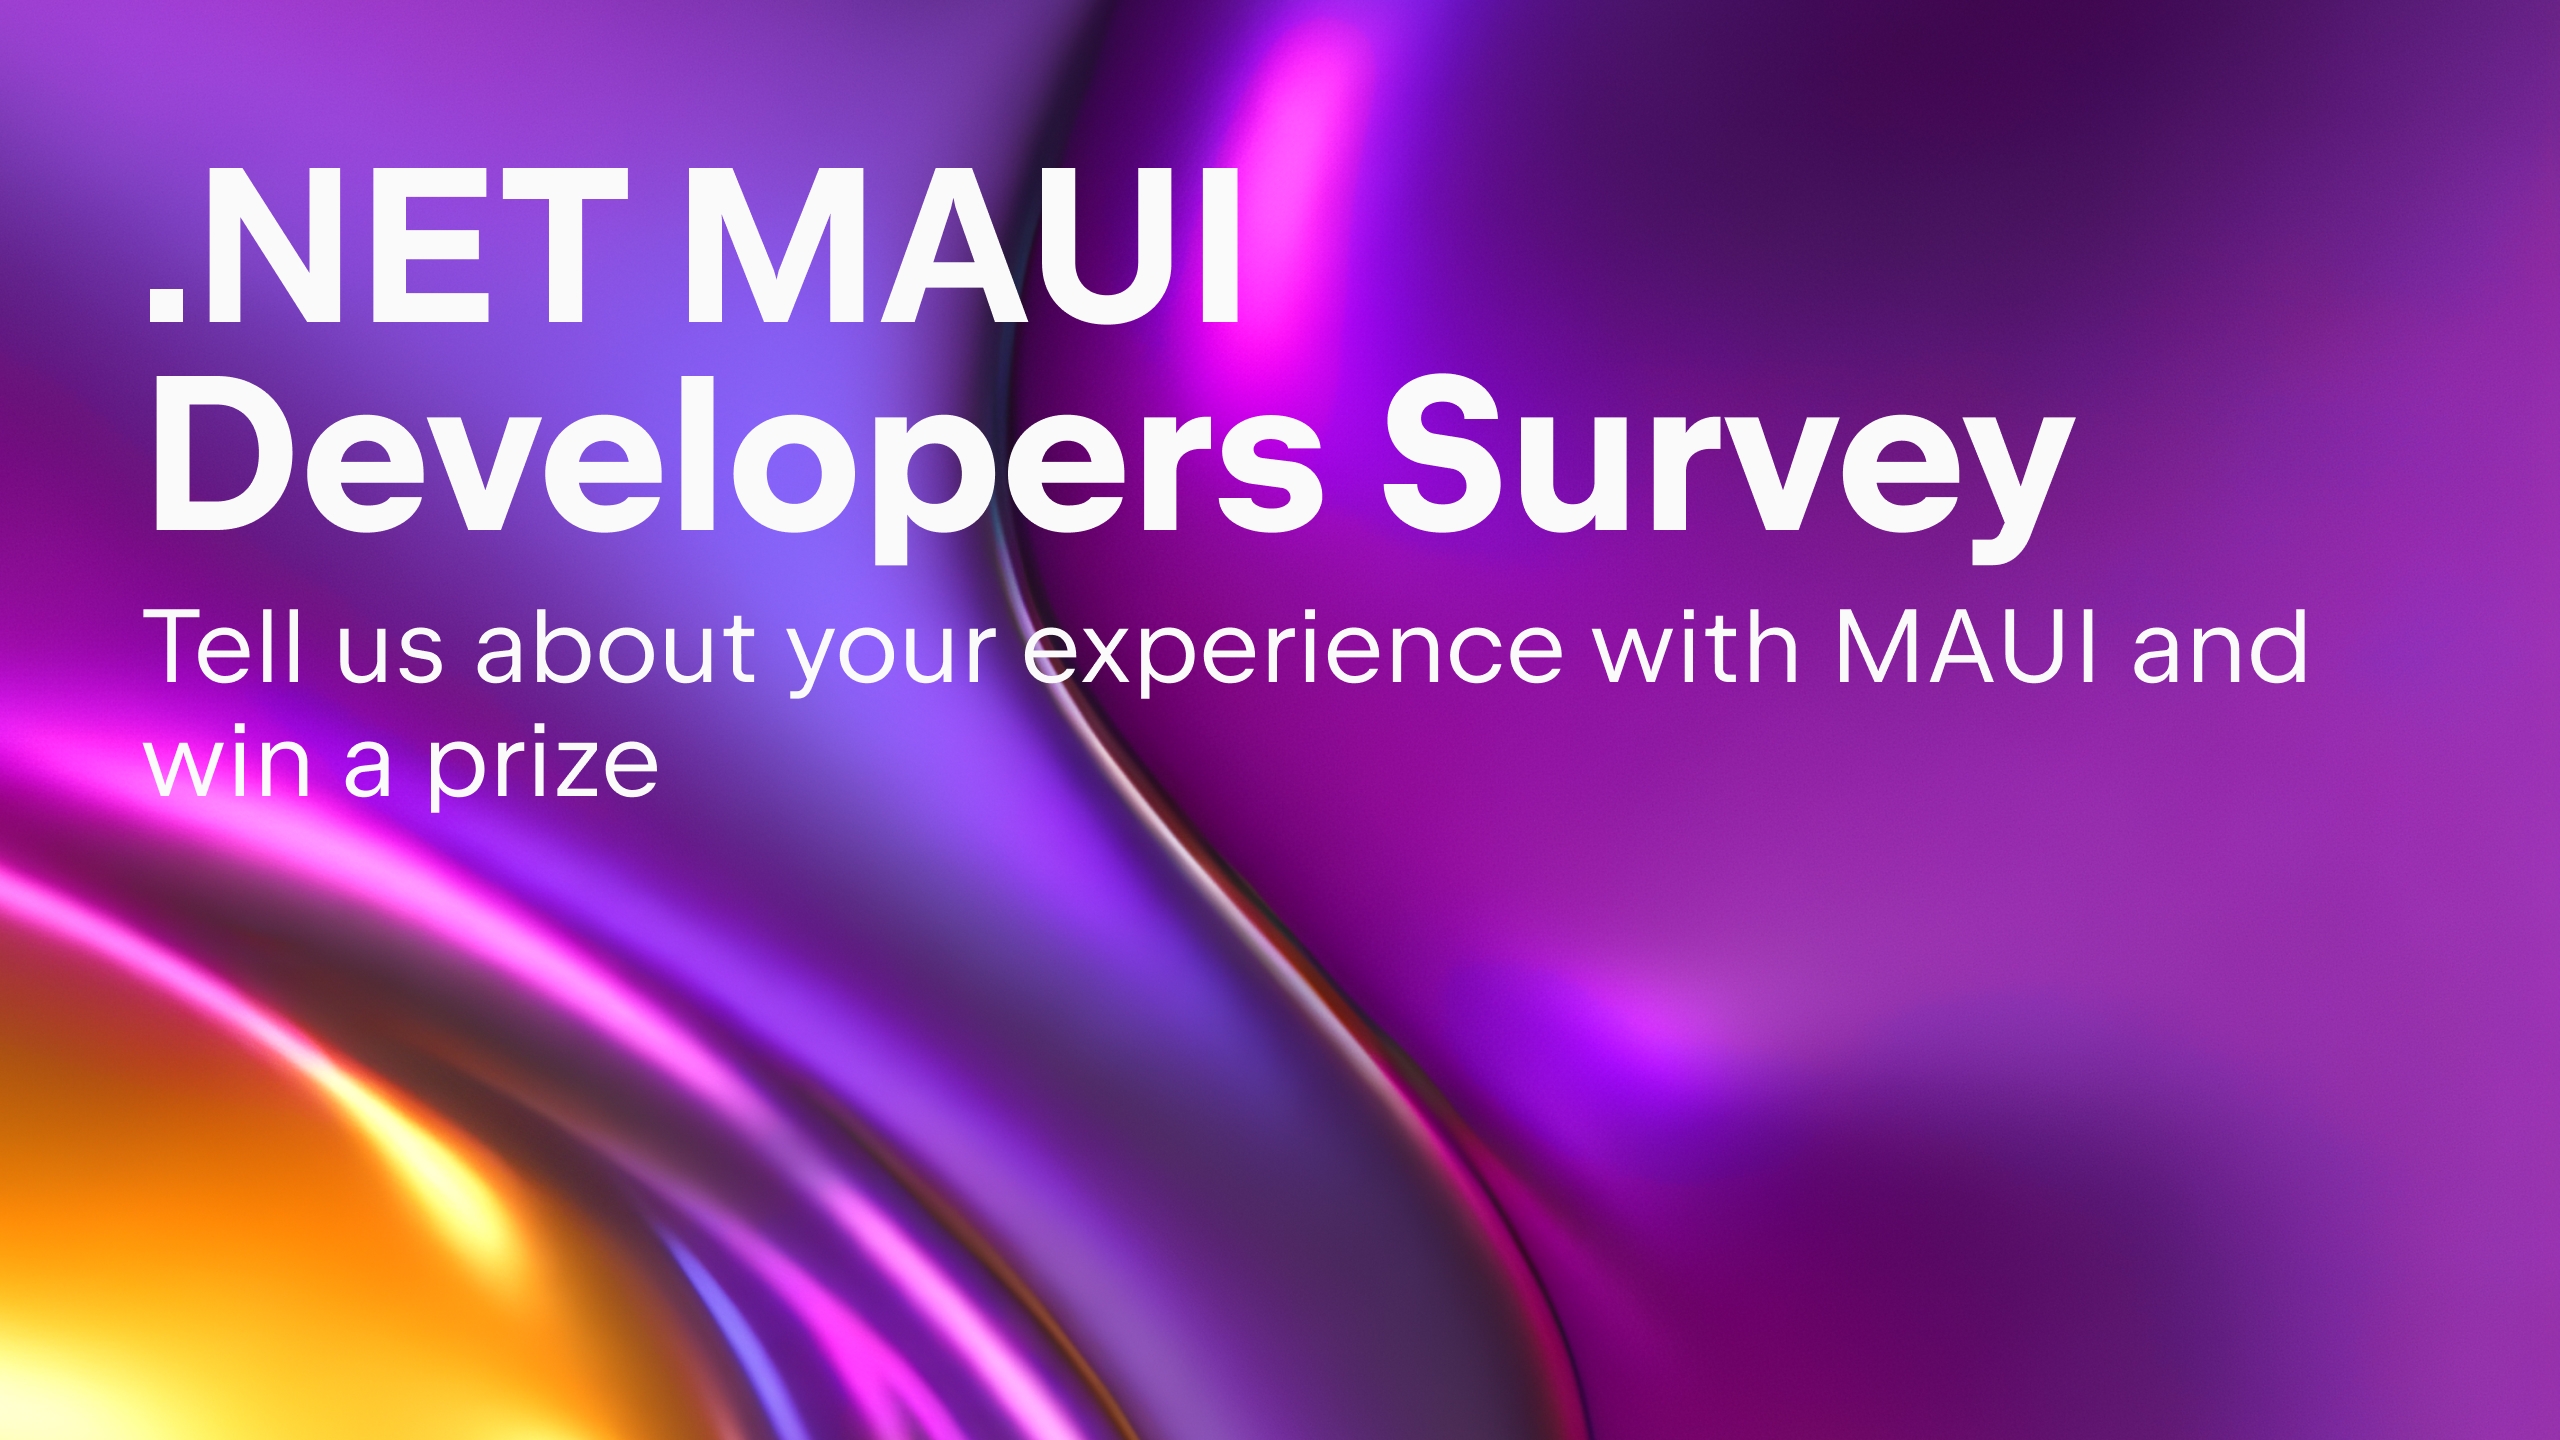 .NET MAUI Developers Survey